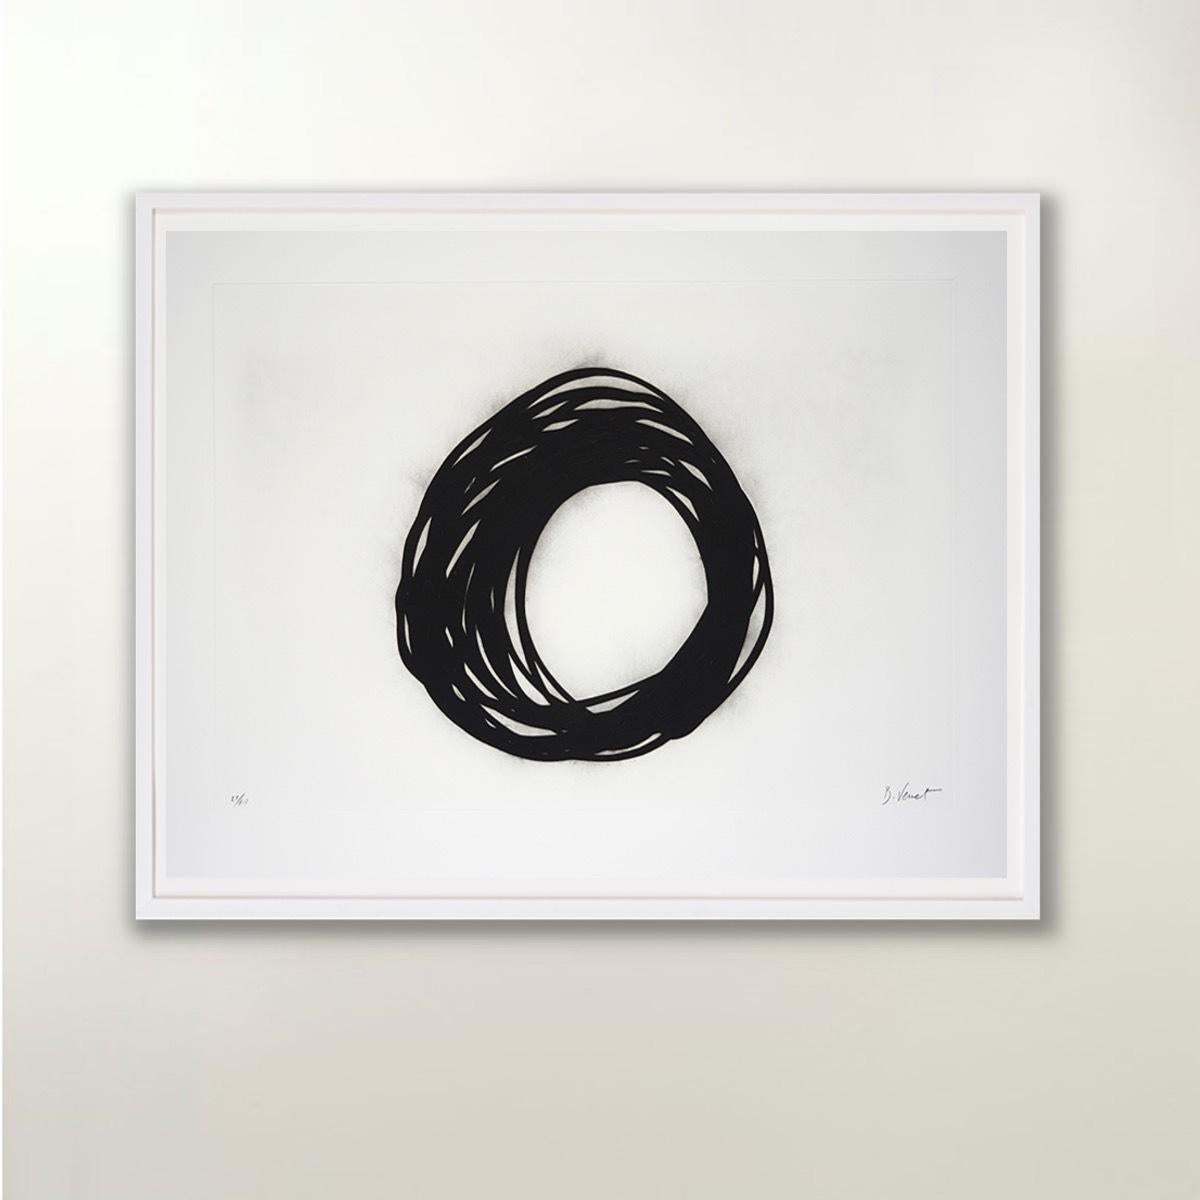 Grib - Contemporary, 21st Century, Etching, Black, Limited Edition, Portfolio - Gray Figurative Print by Bernar Venet